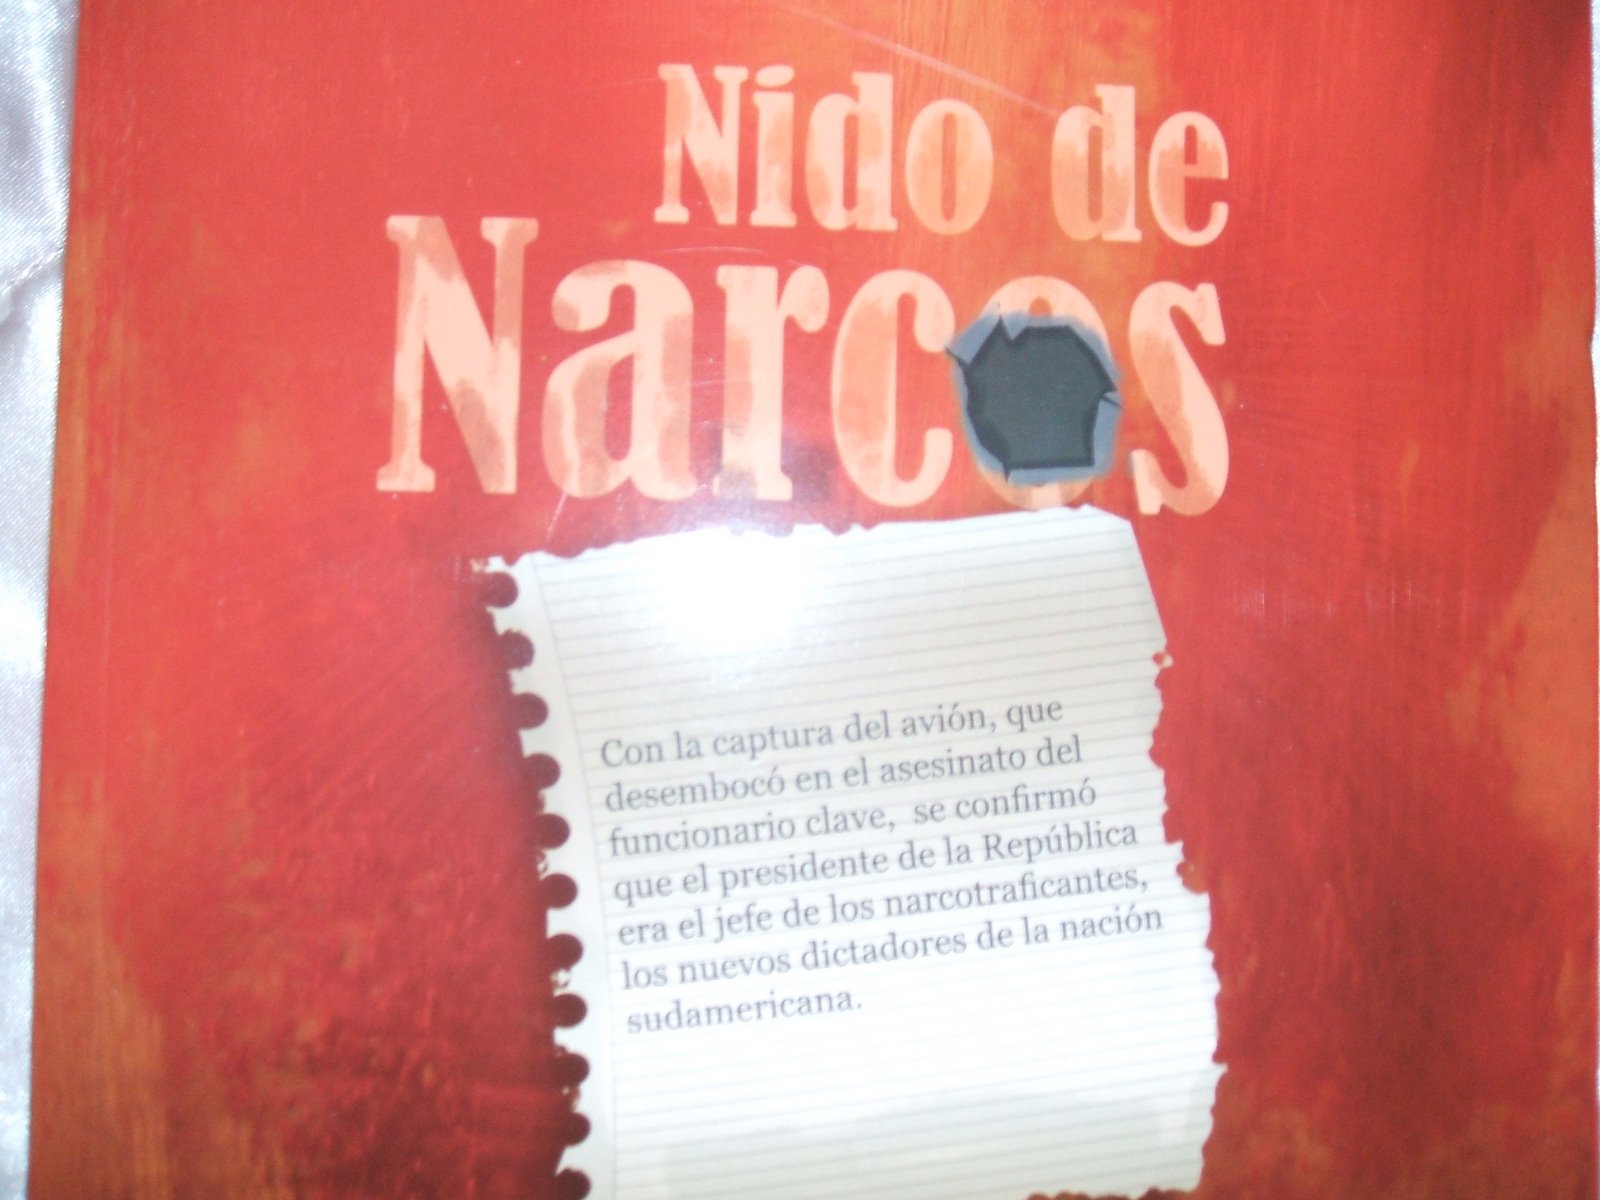 [Nido+de+narcos+2+001.JPG]